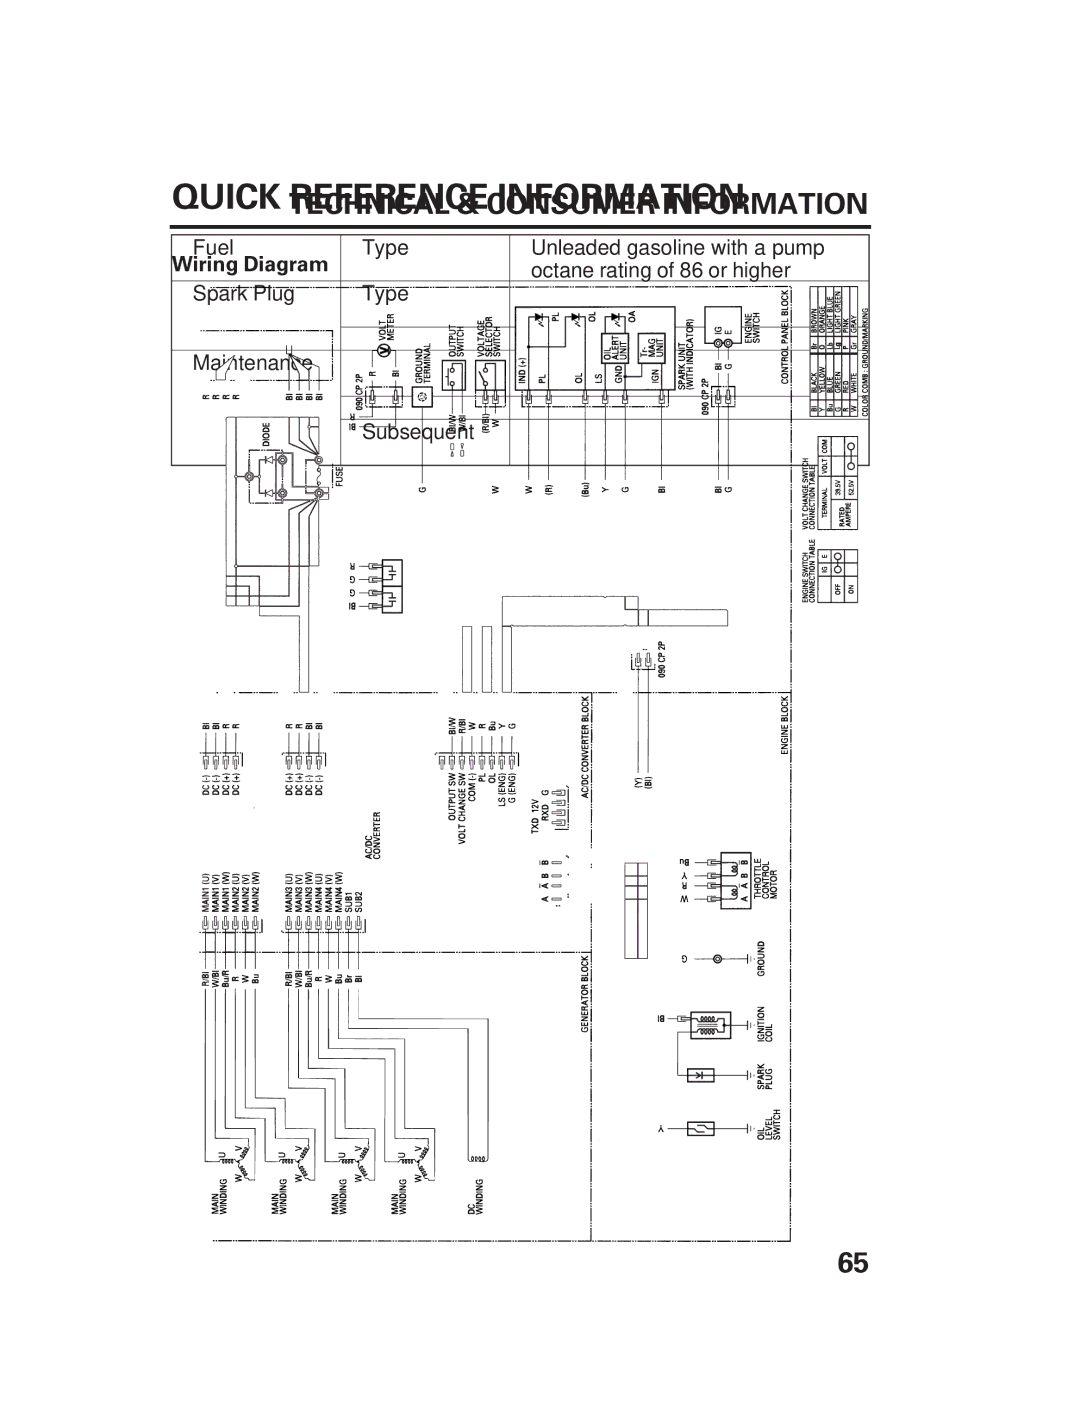 Honda Power Equipment DCX3000 manual Quick Reference Information, Denso W16EPR-U Denso 